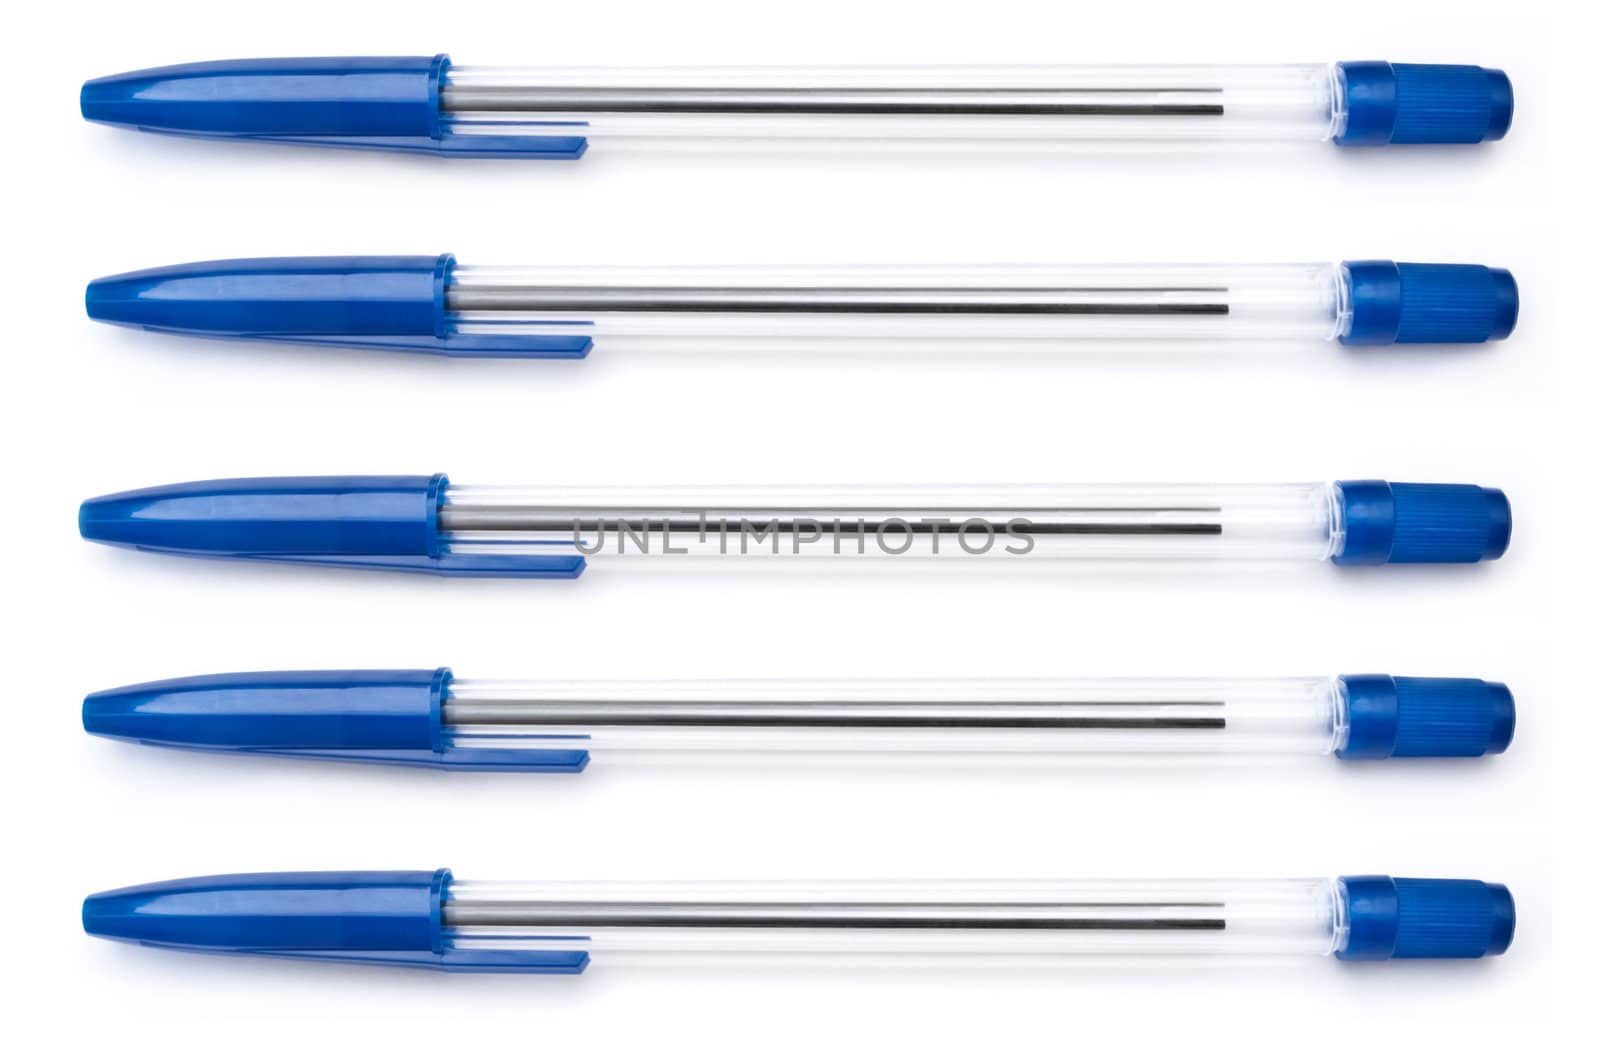 Five blue writing pens arranged horizontally over white